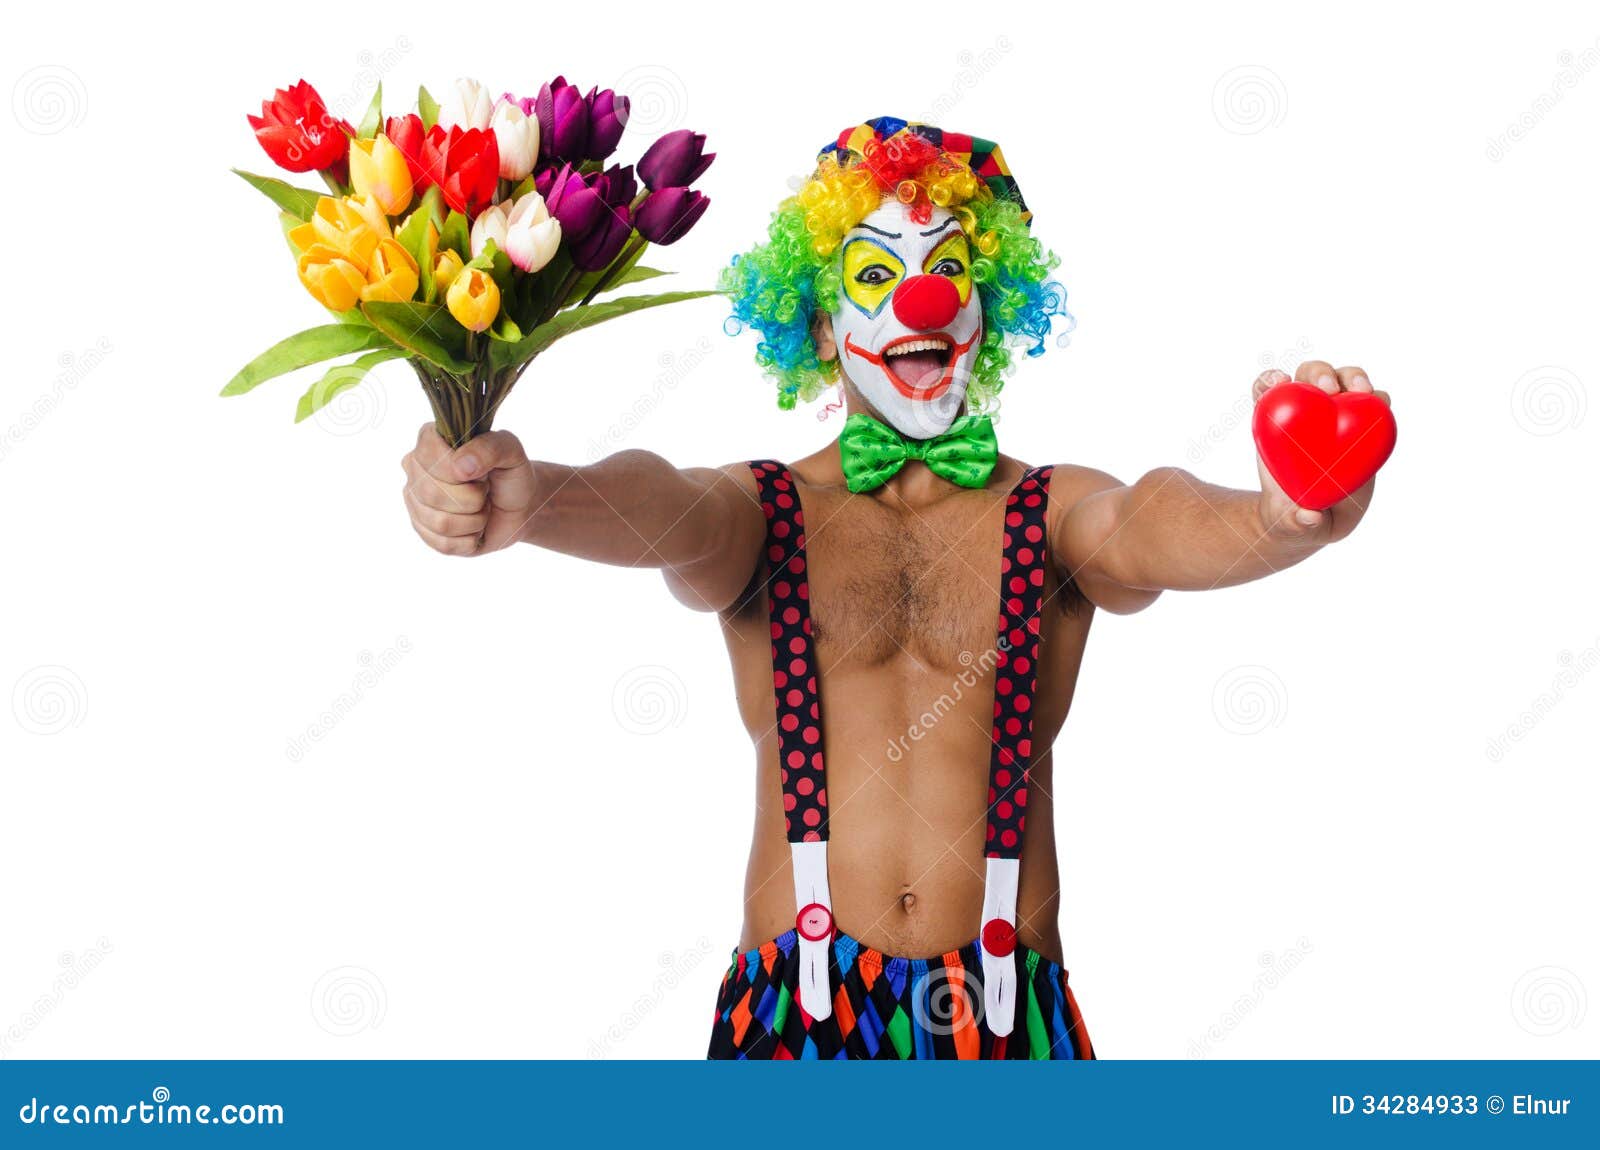 Клоун с цветами. Клоун с цветочком. Клоун и цветы картинки. Клоунский фон с цветами.